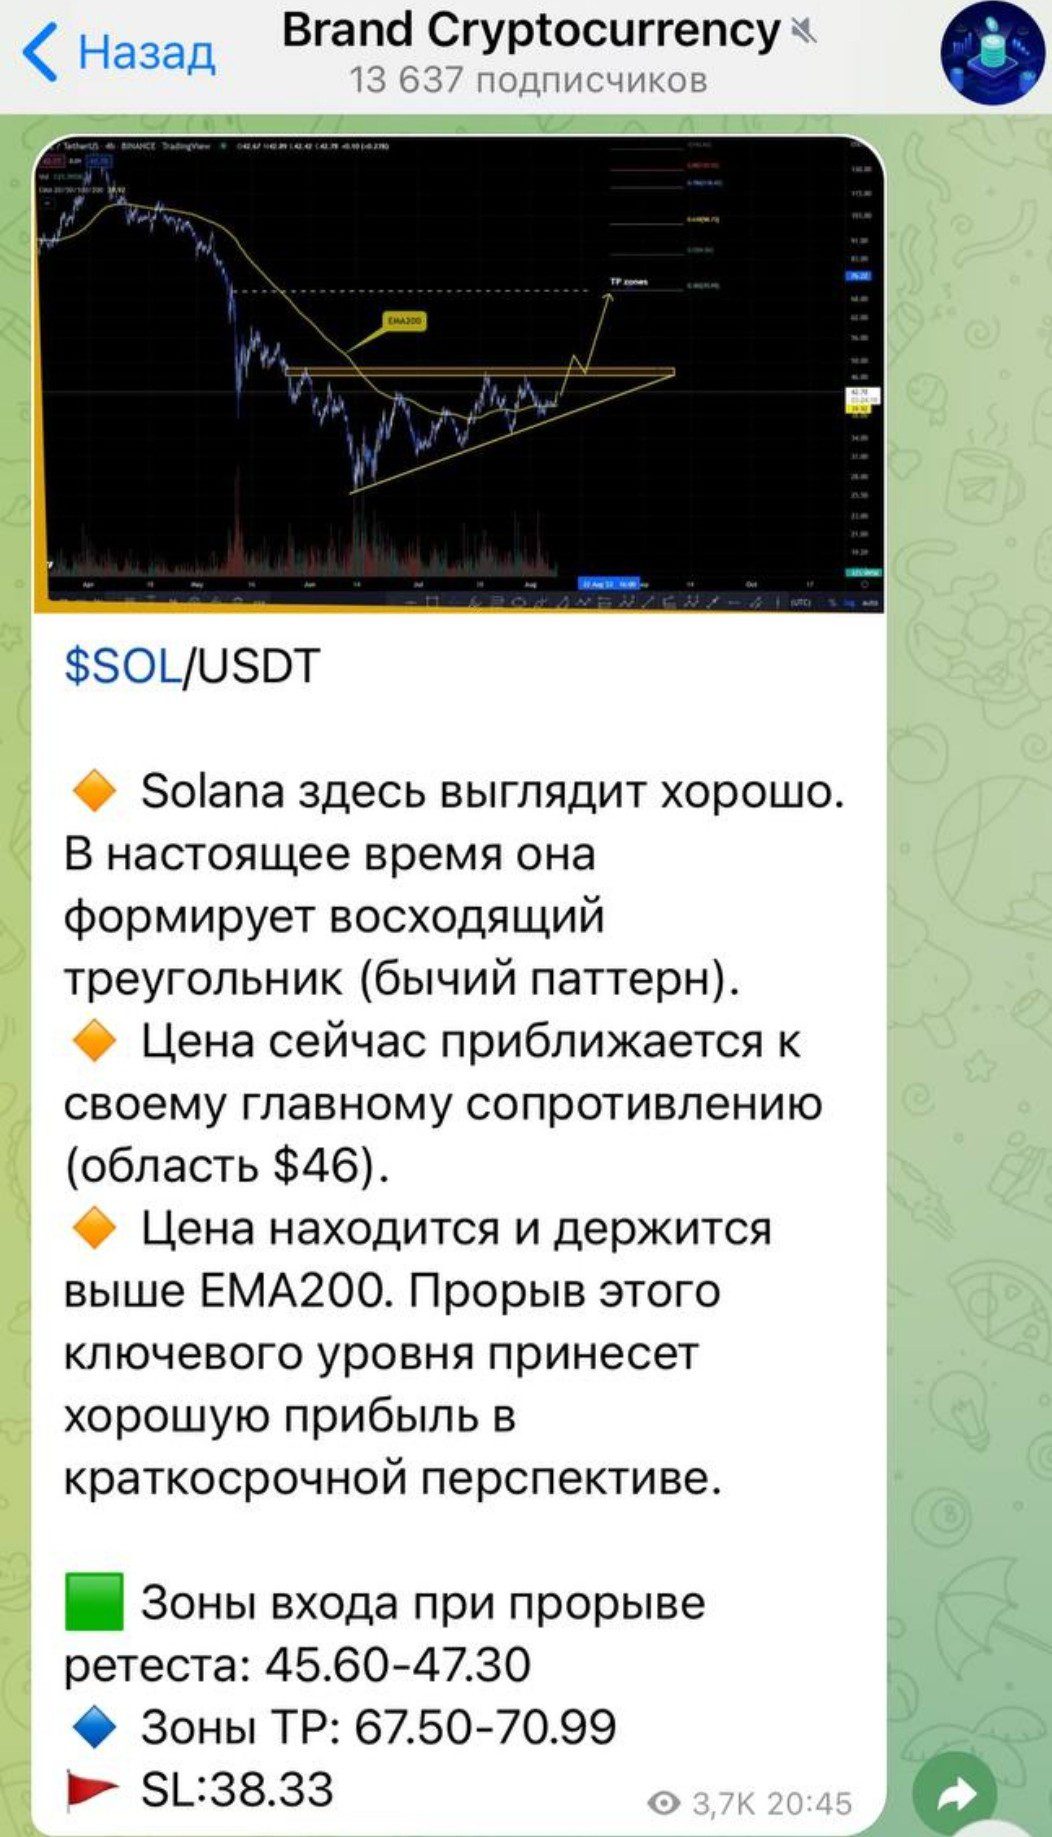 Brand Cryptocurrency телеграм